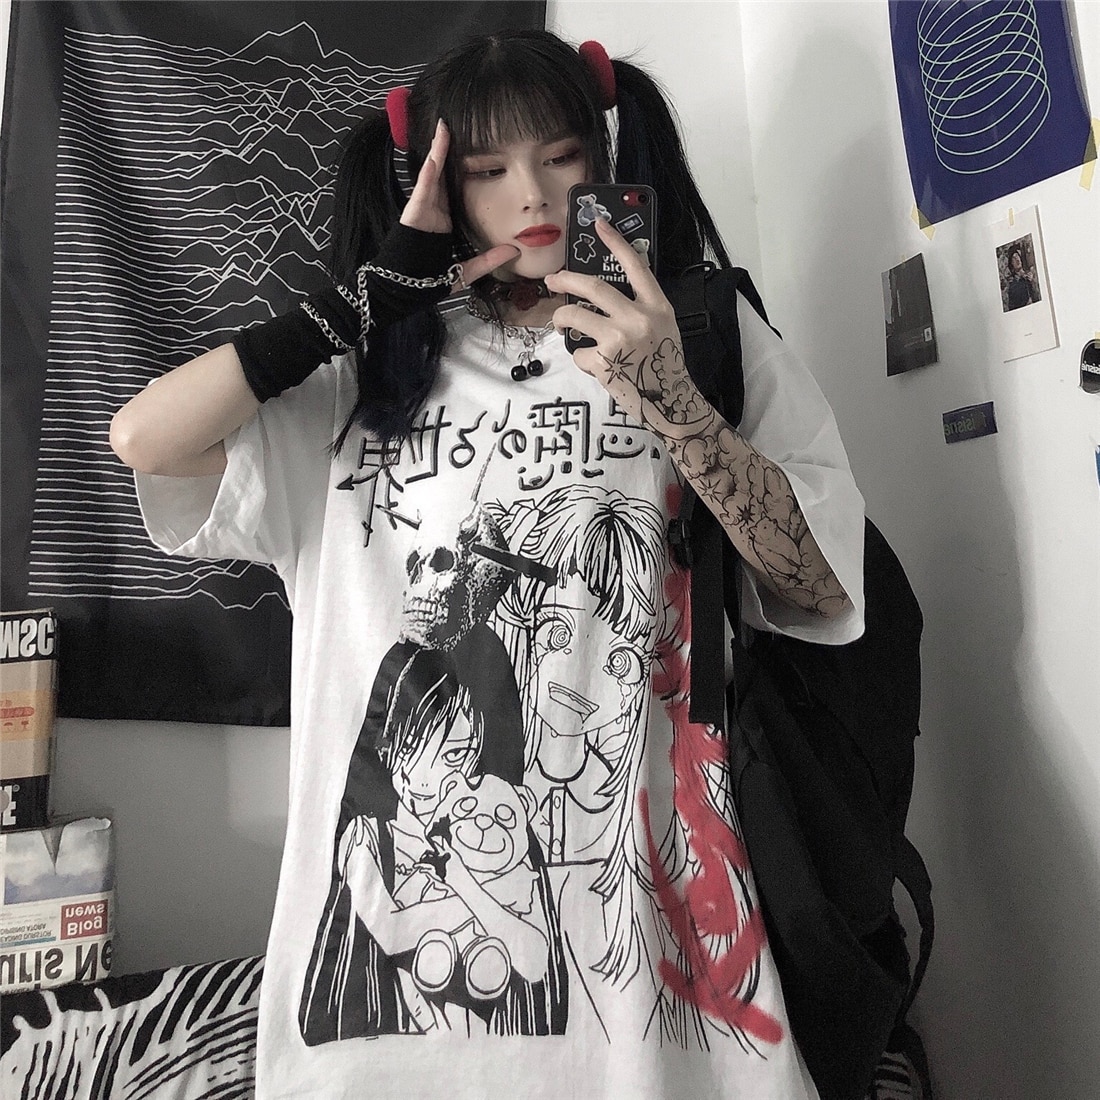 Woman Tshirts Harajuku Street Dark Spoof Cartoon Print Loose Short-sleeved Ladies T-shirt Clothing Top Vetement Femme Uncategorized